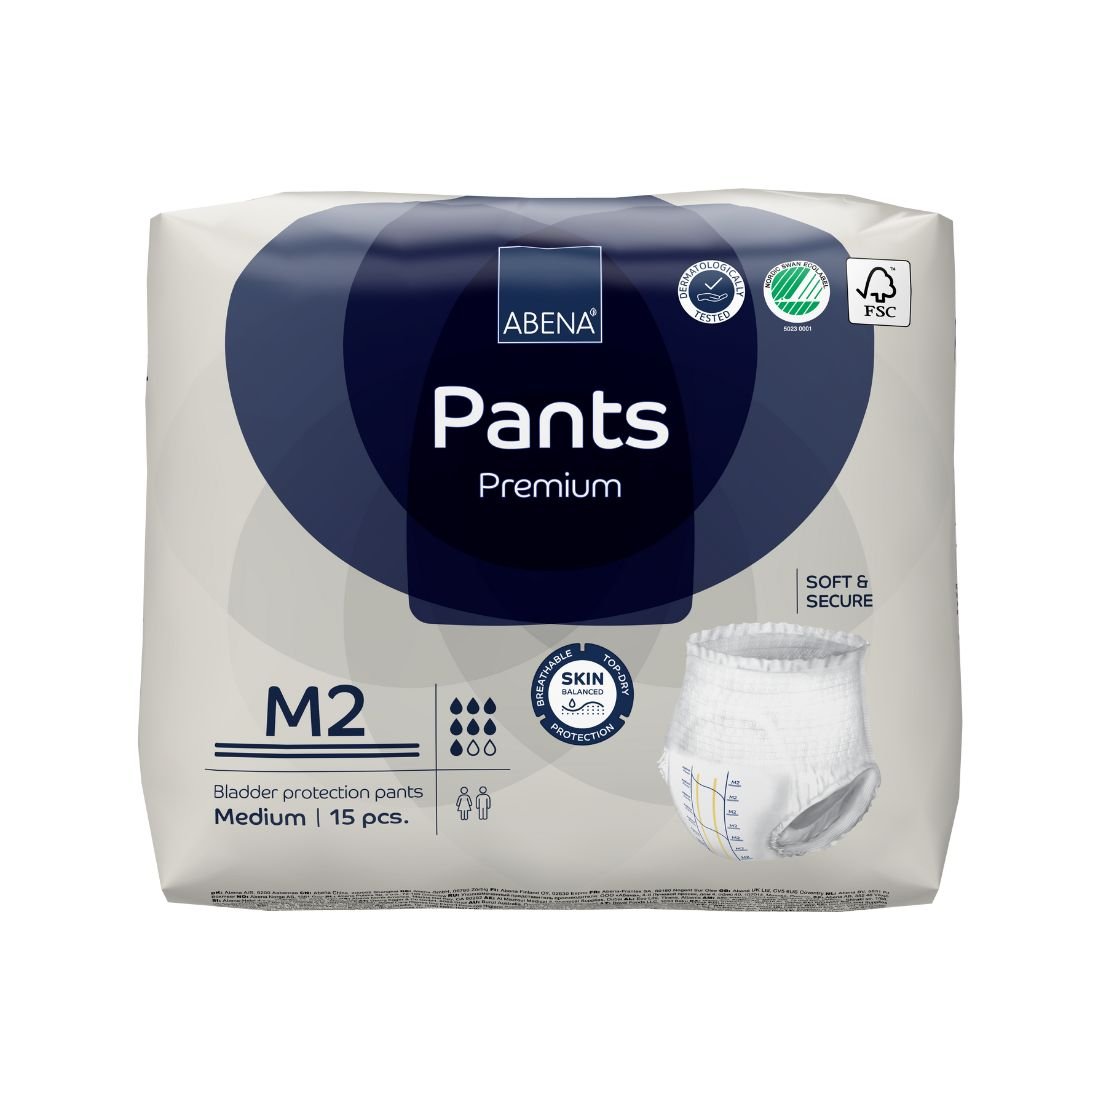 Abena Pants Premium 2, Windelhose